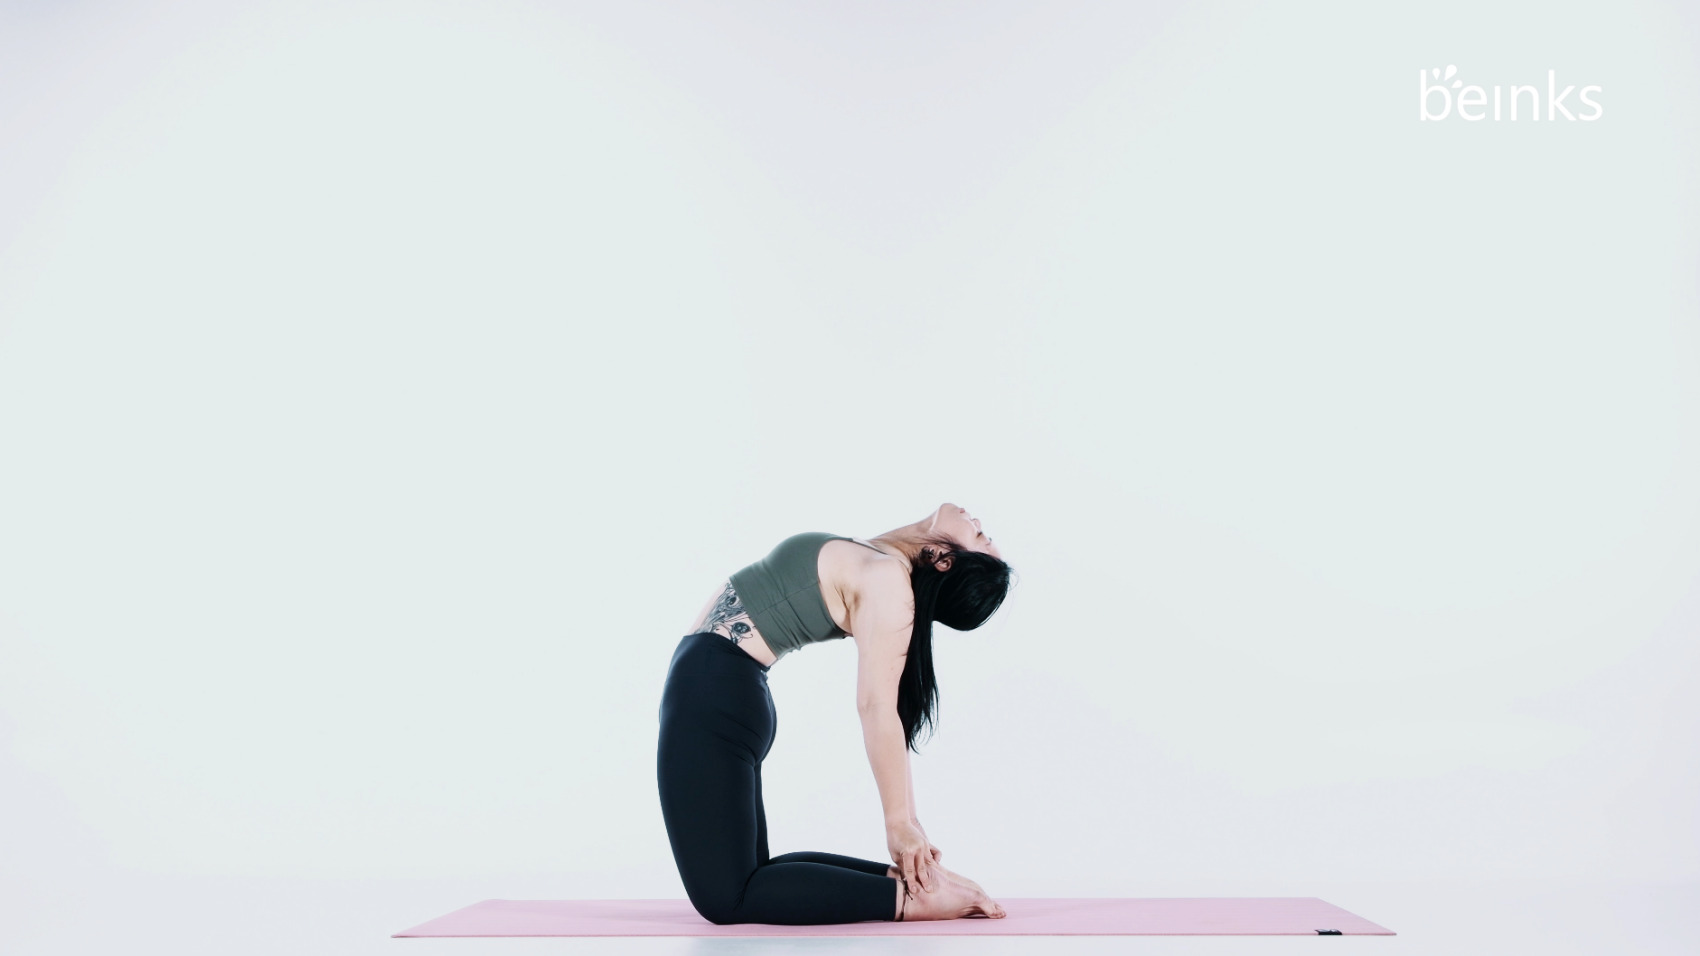 Ushtrasana (Camel Pose) - Yoga Asana to strengthen Neck & Shoulders